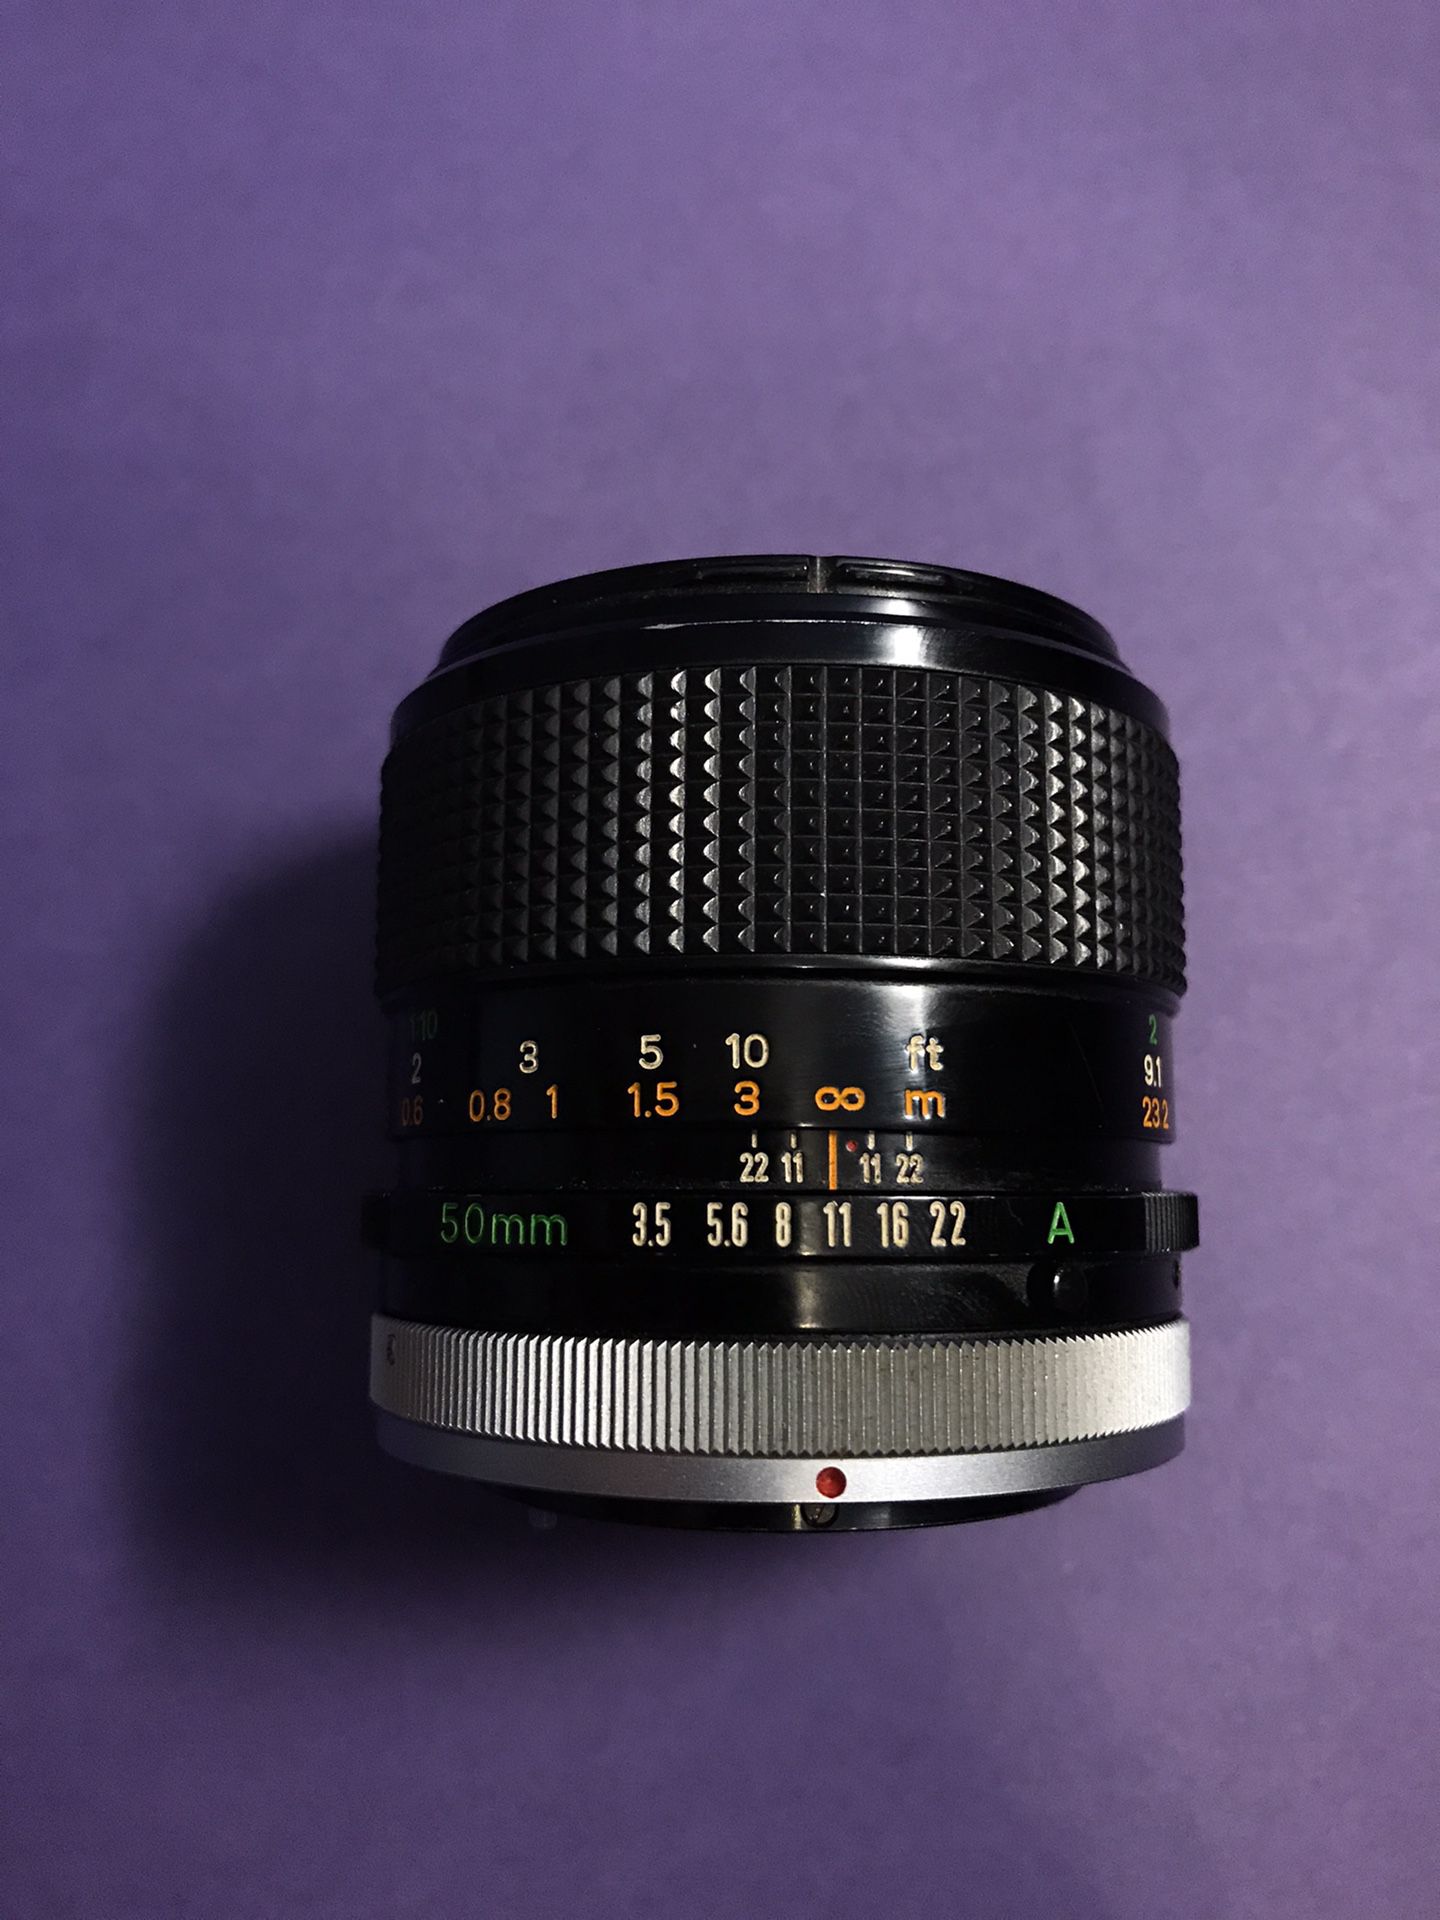 Canon FD 50mm 3.5 Macro lens - fits mirrorless